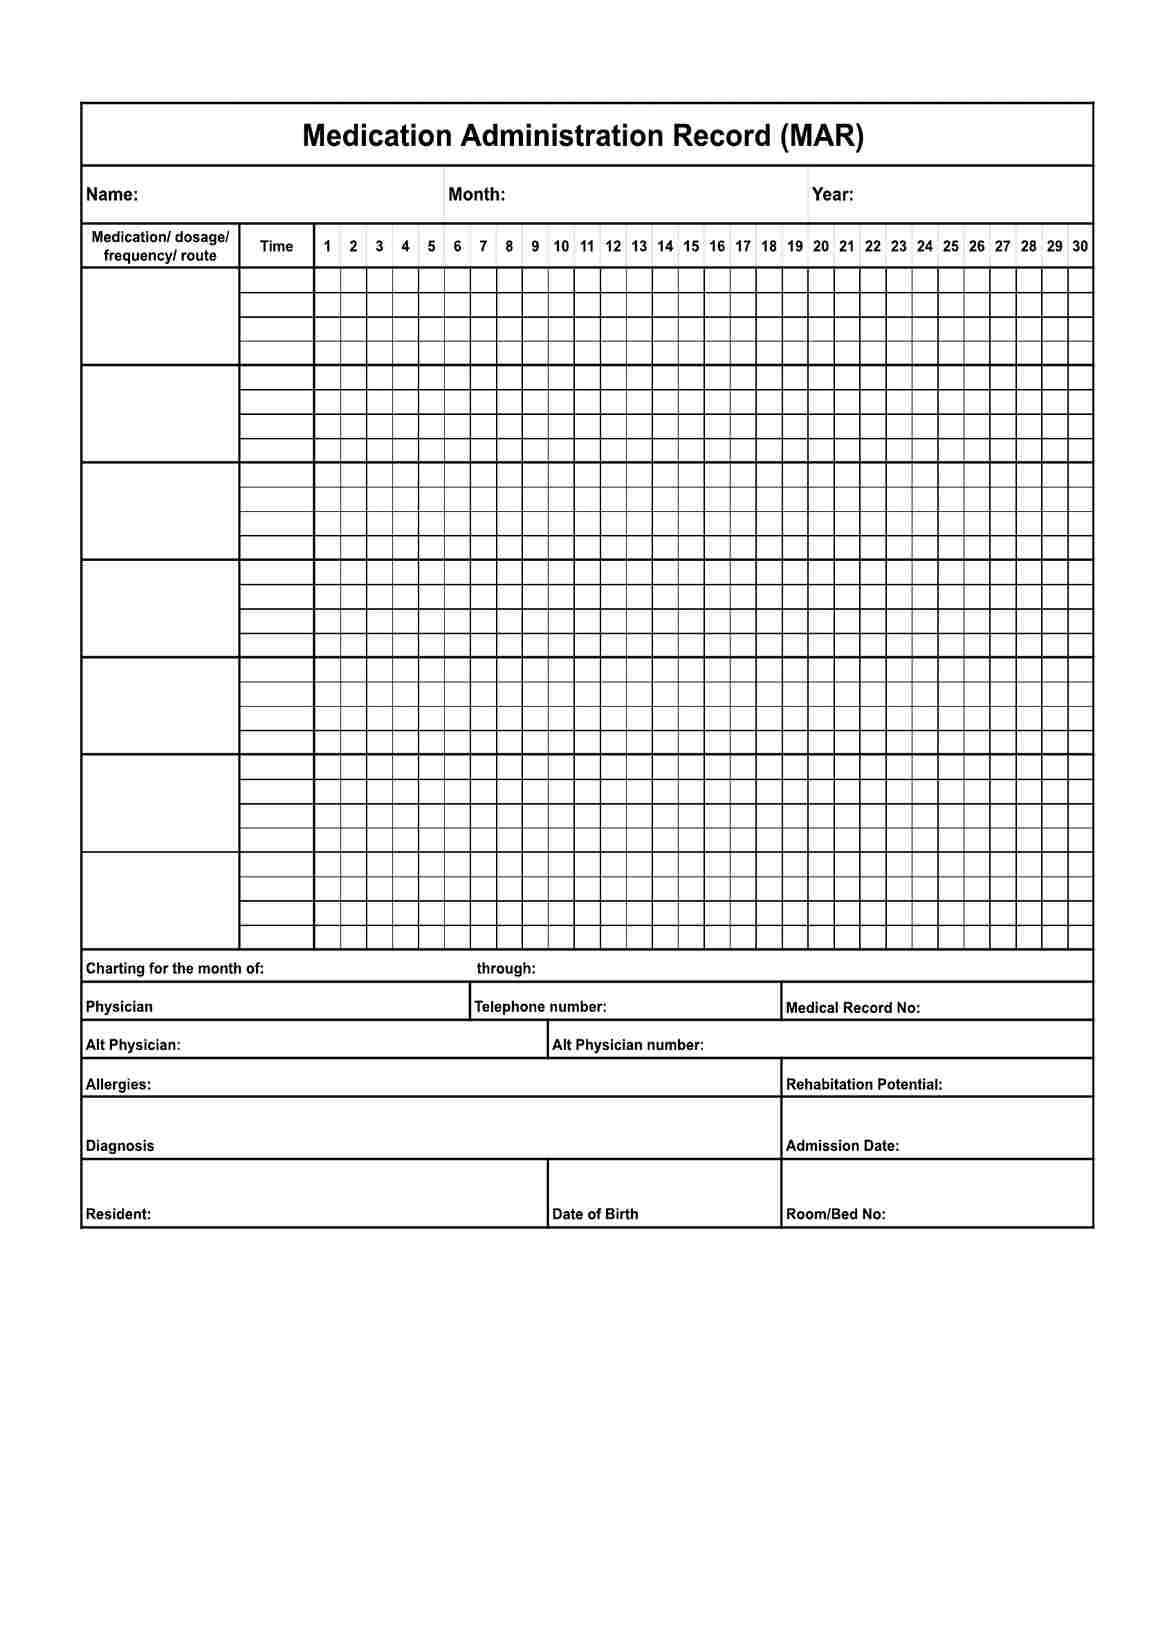 Medication Administration Record (MAR) PDF Example